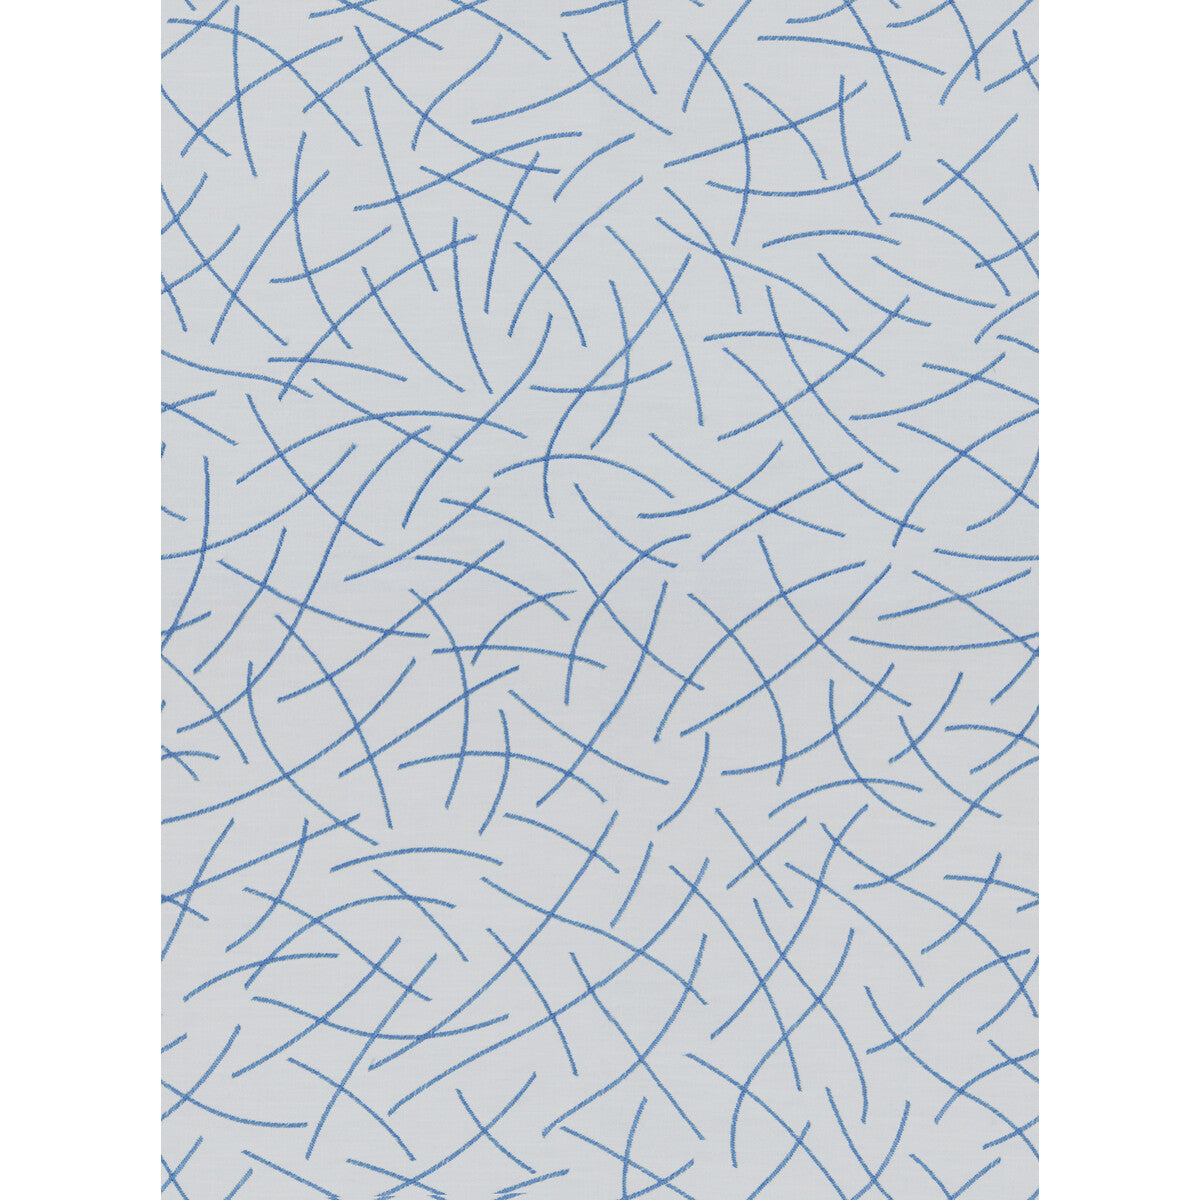 Stringart fabric in horizon color - pattern 34607.5.0 - by Kravet Design